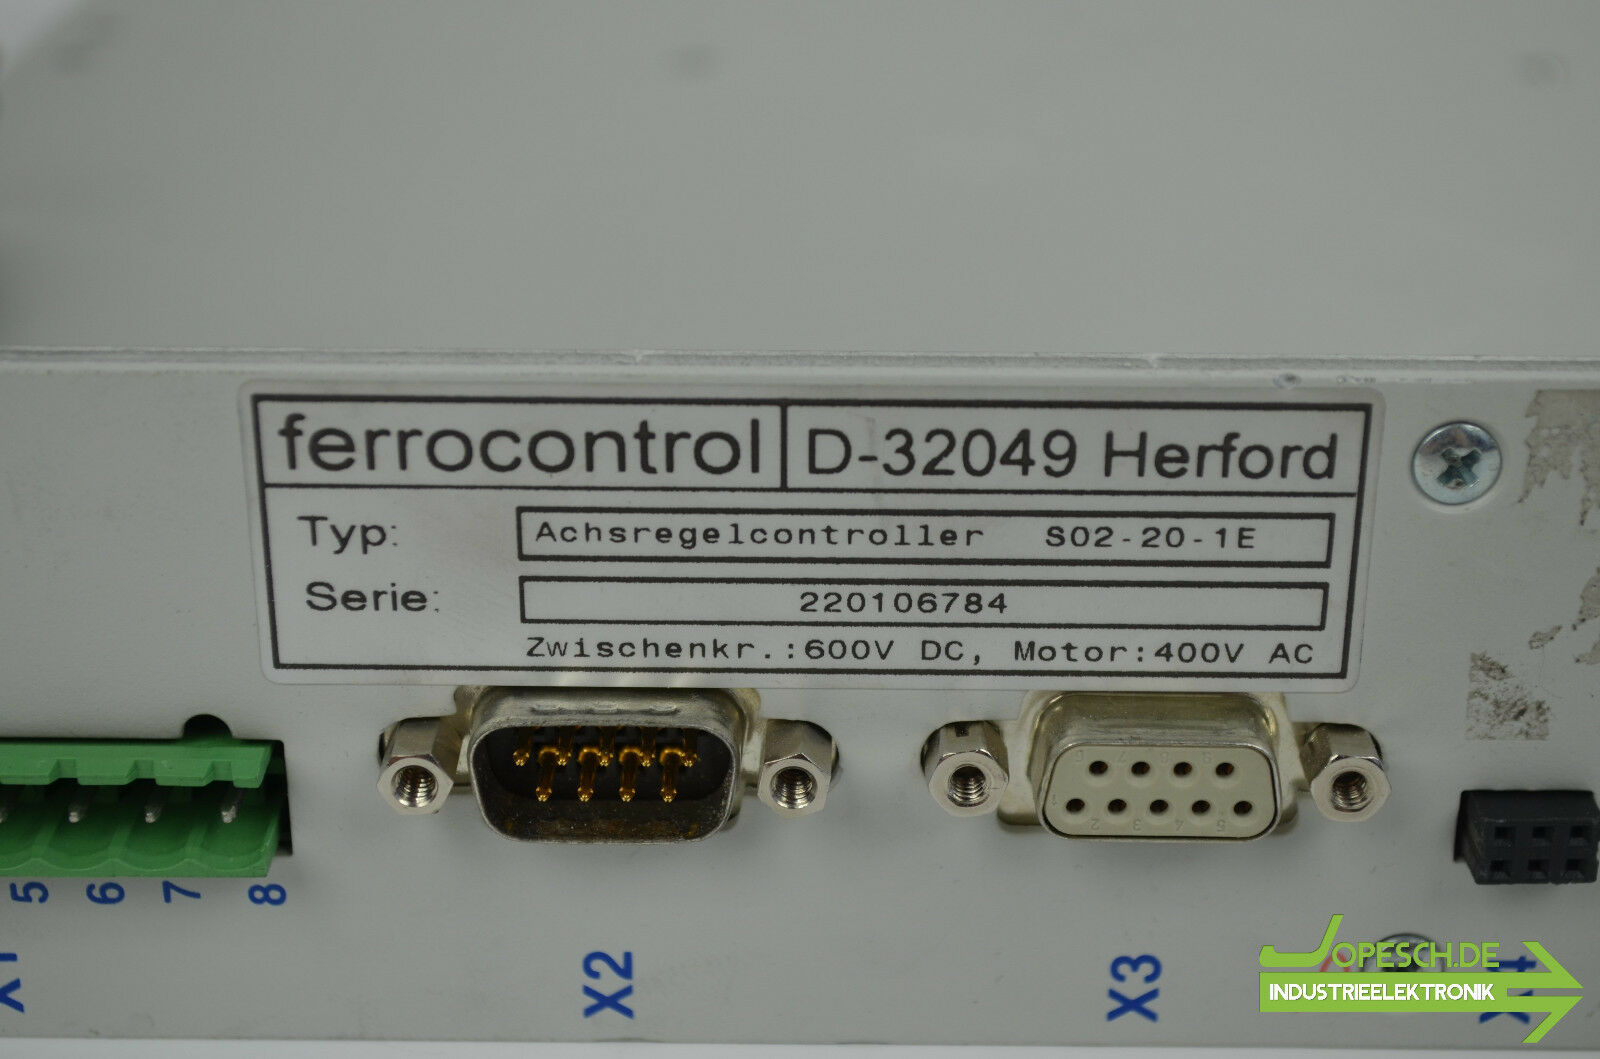 Ferrocontrol Achsregelcontroller S02-20-1E